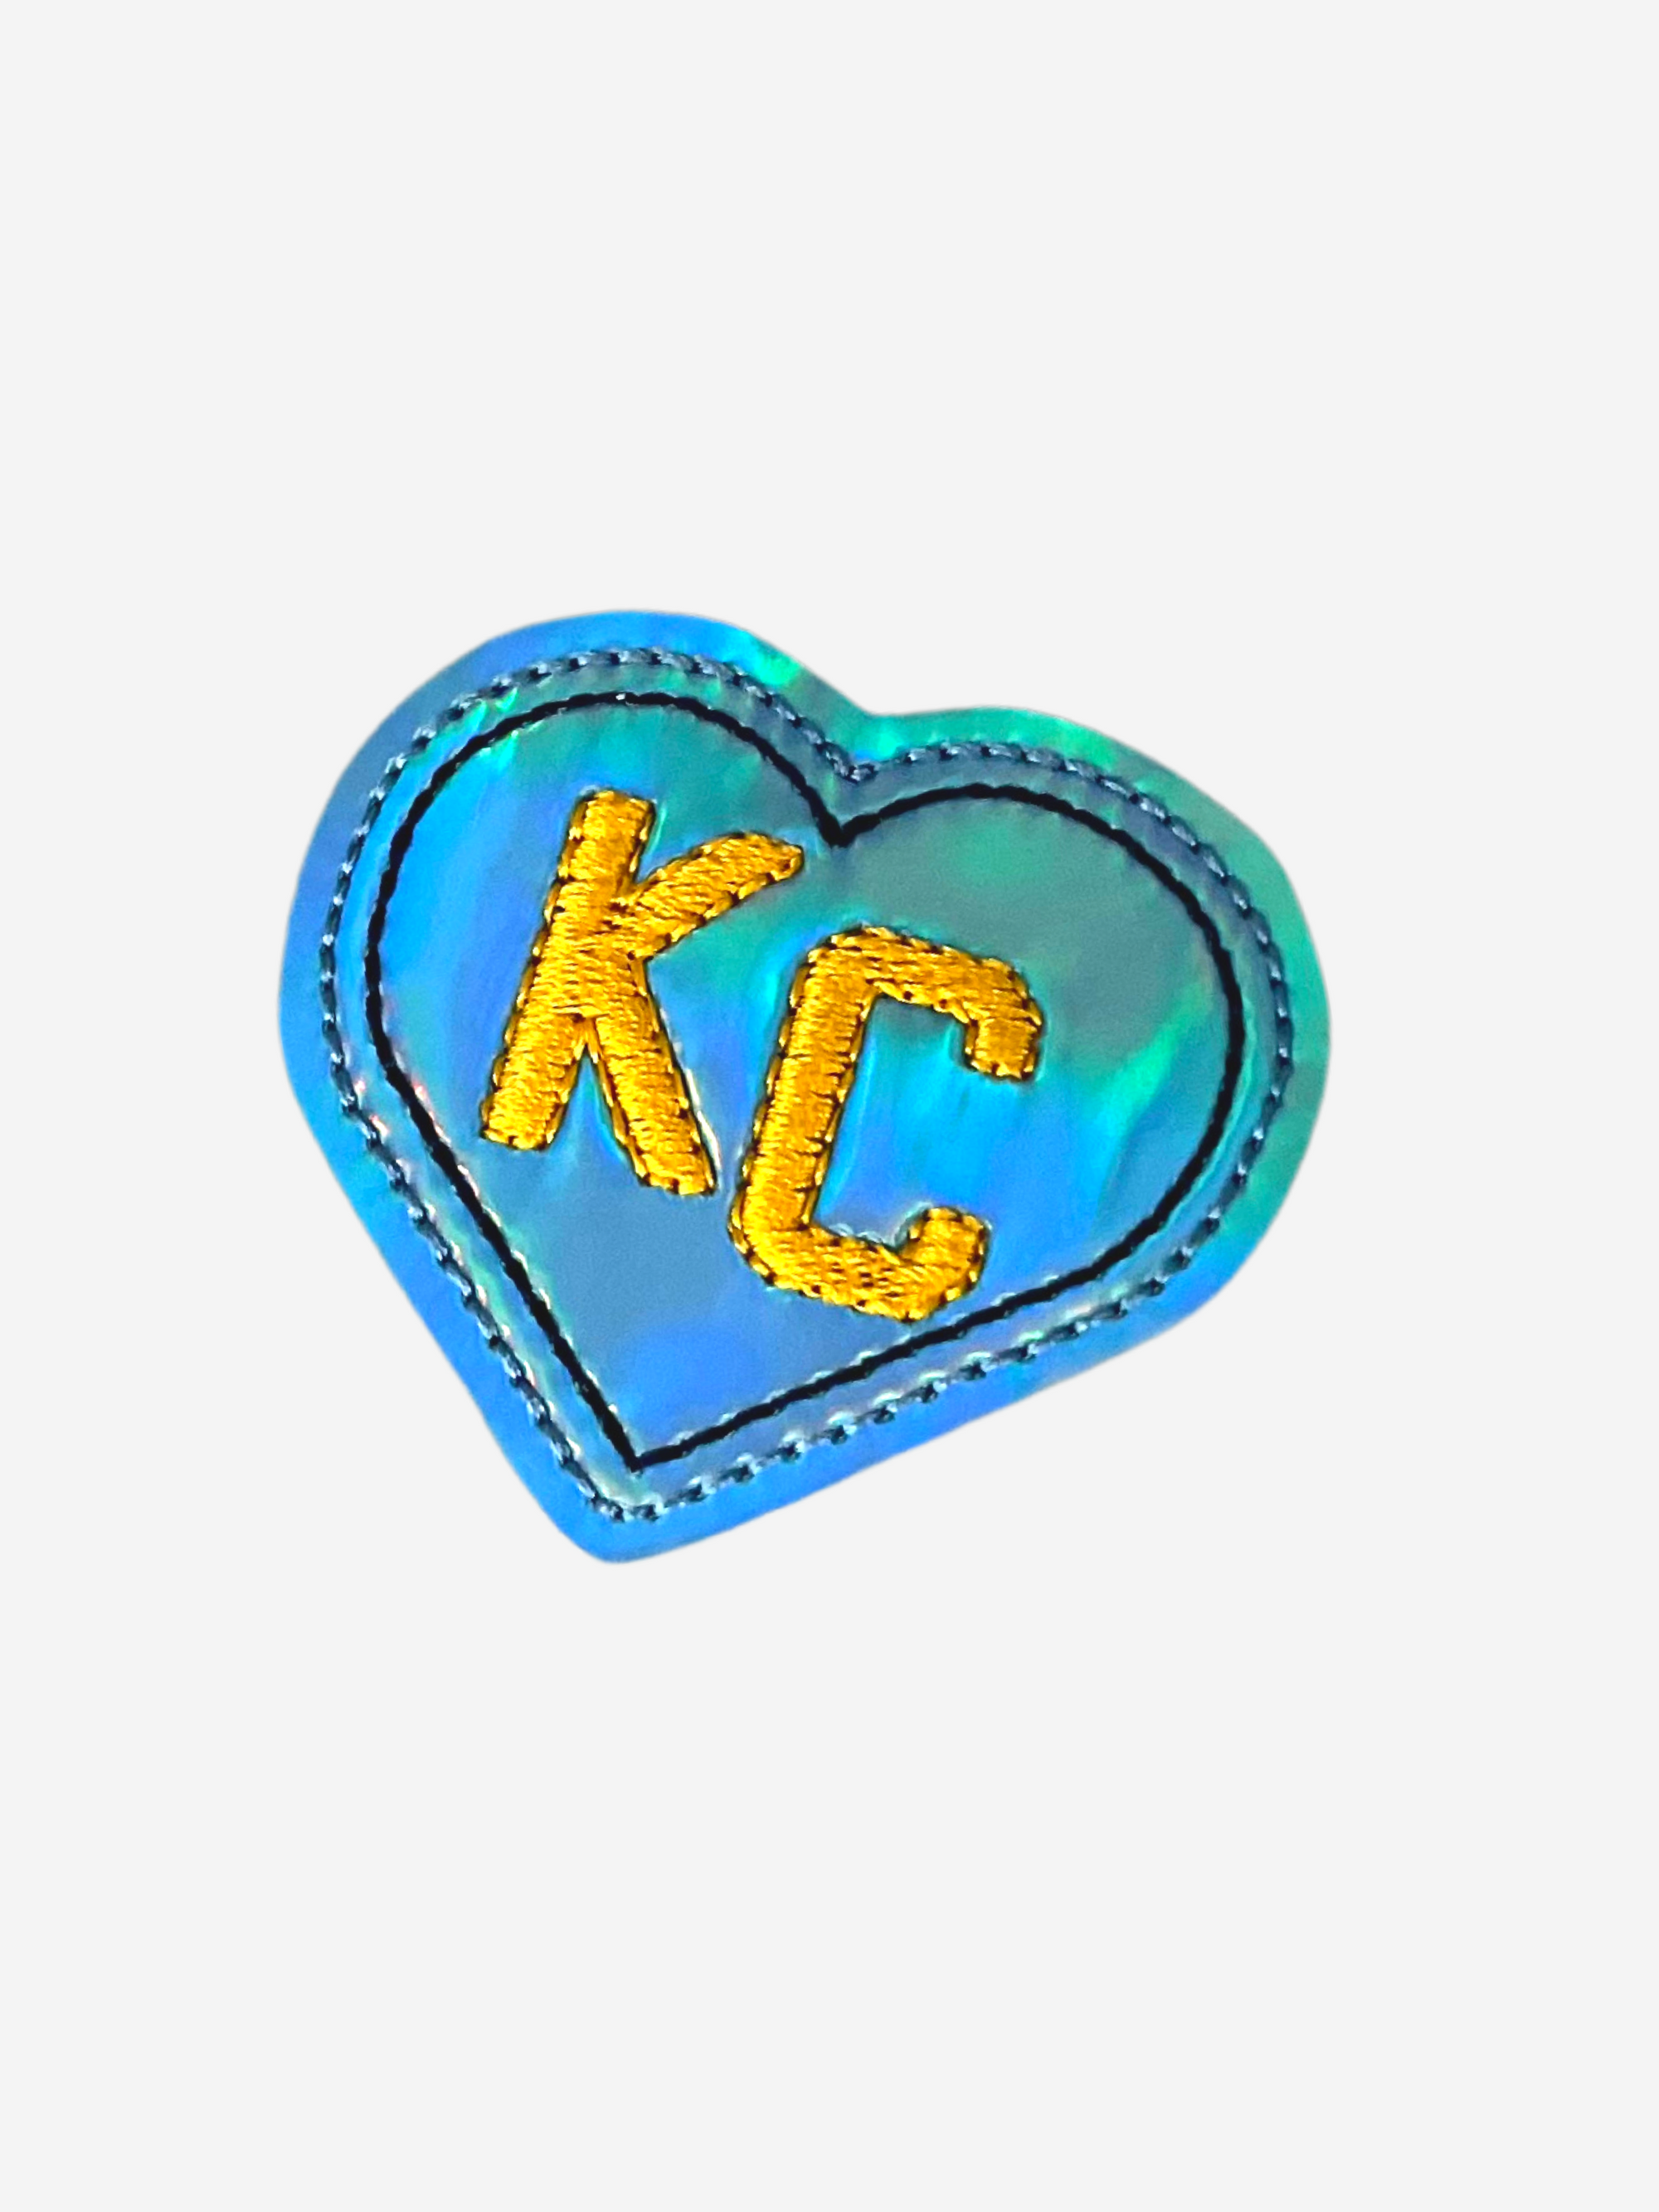 Badge Reel Accessory Charlie Hustle Light Blue Yellow Heart